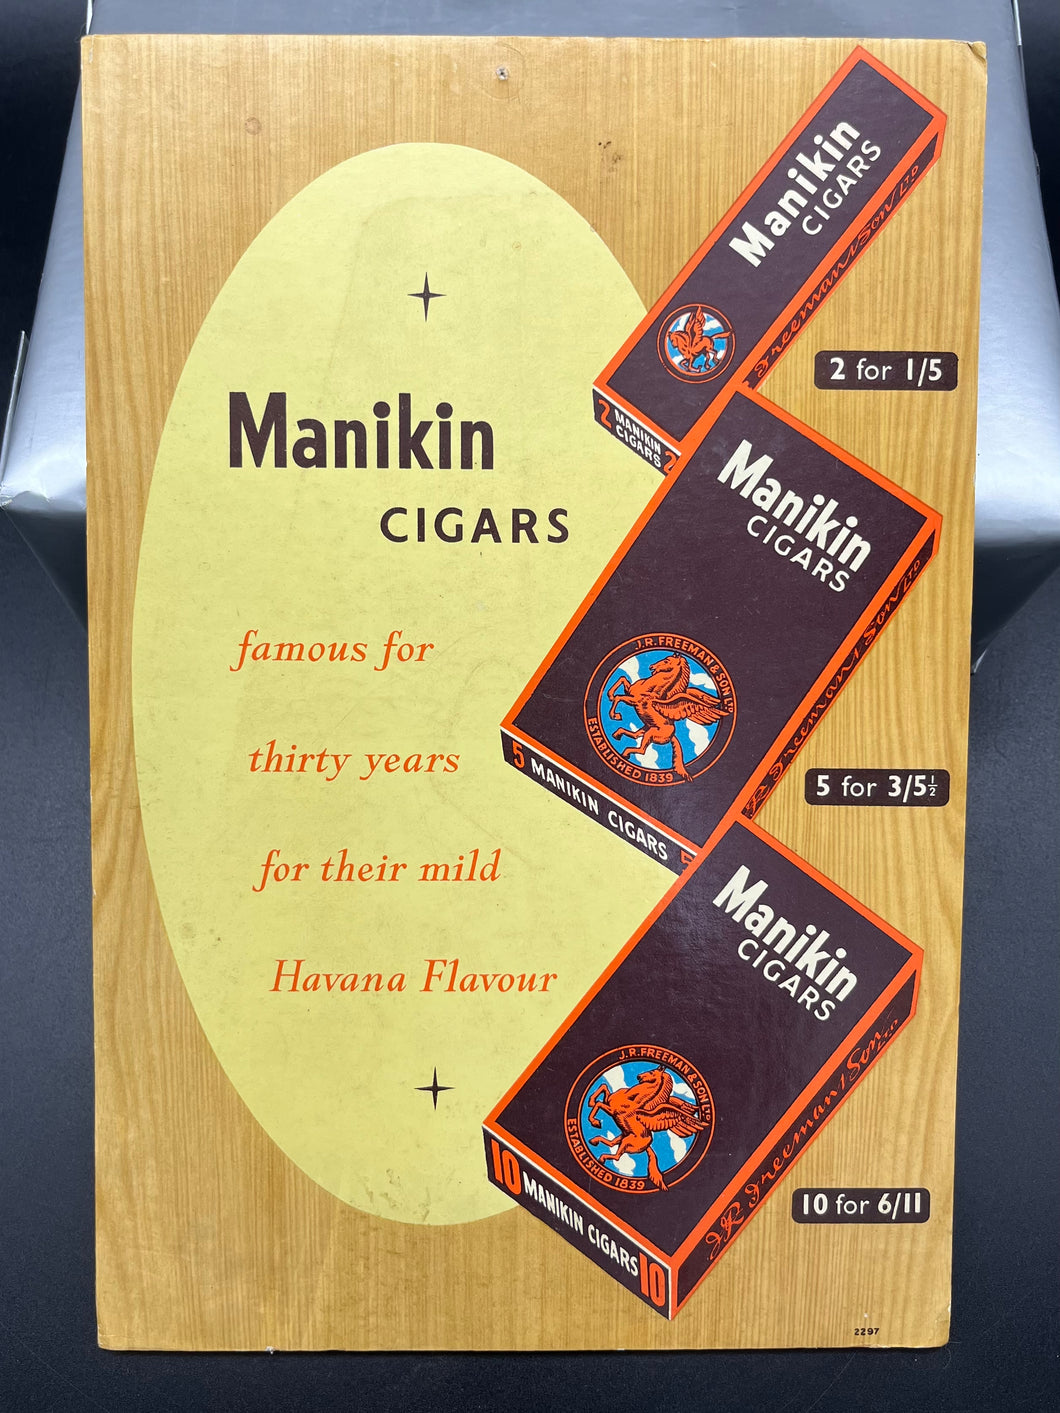 Manikin Cigars Cardboard Counter Display Advertisement